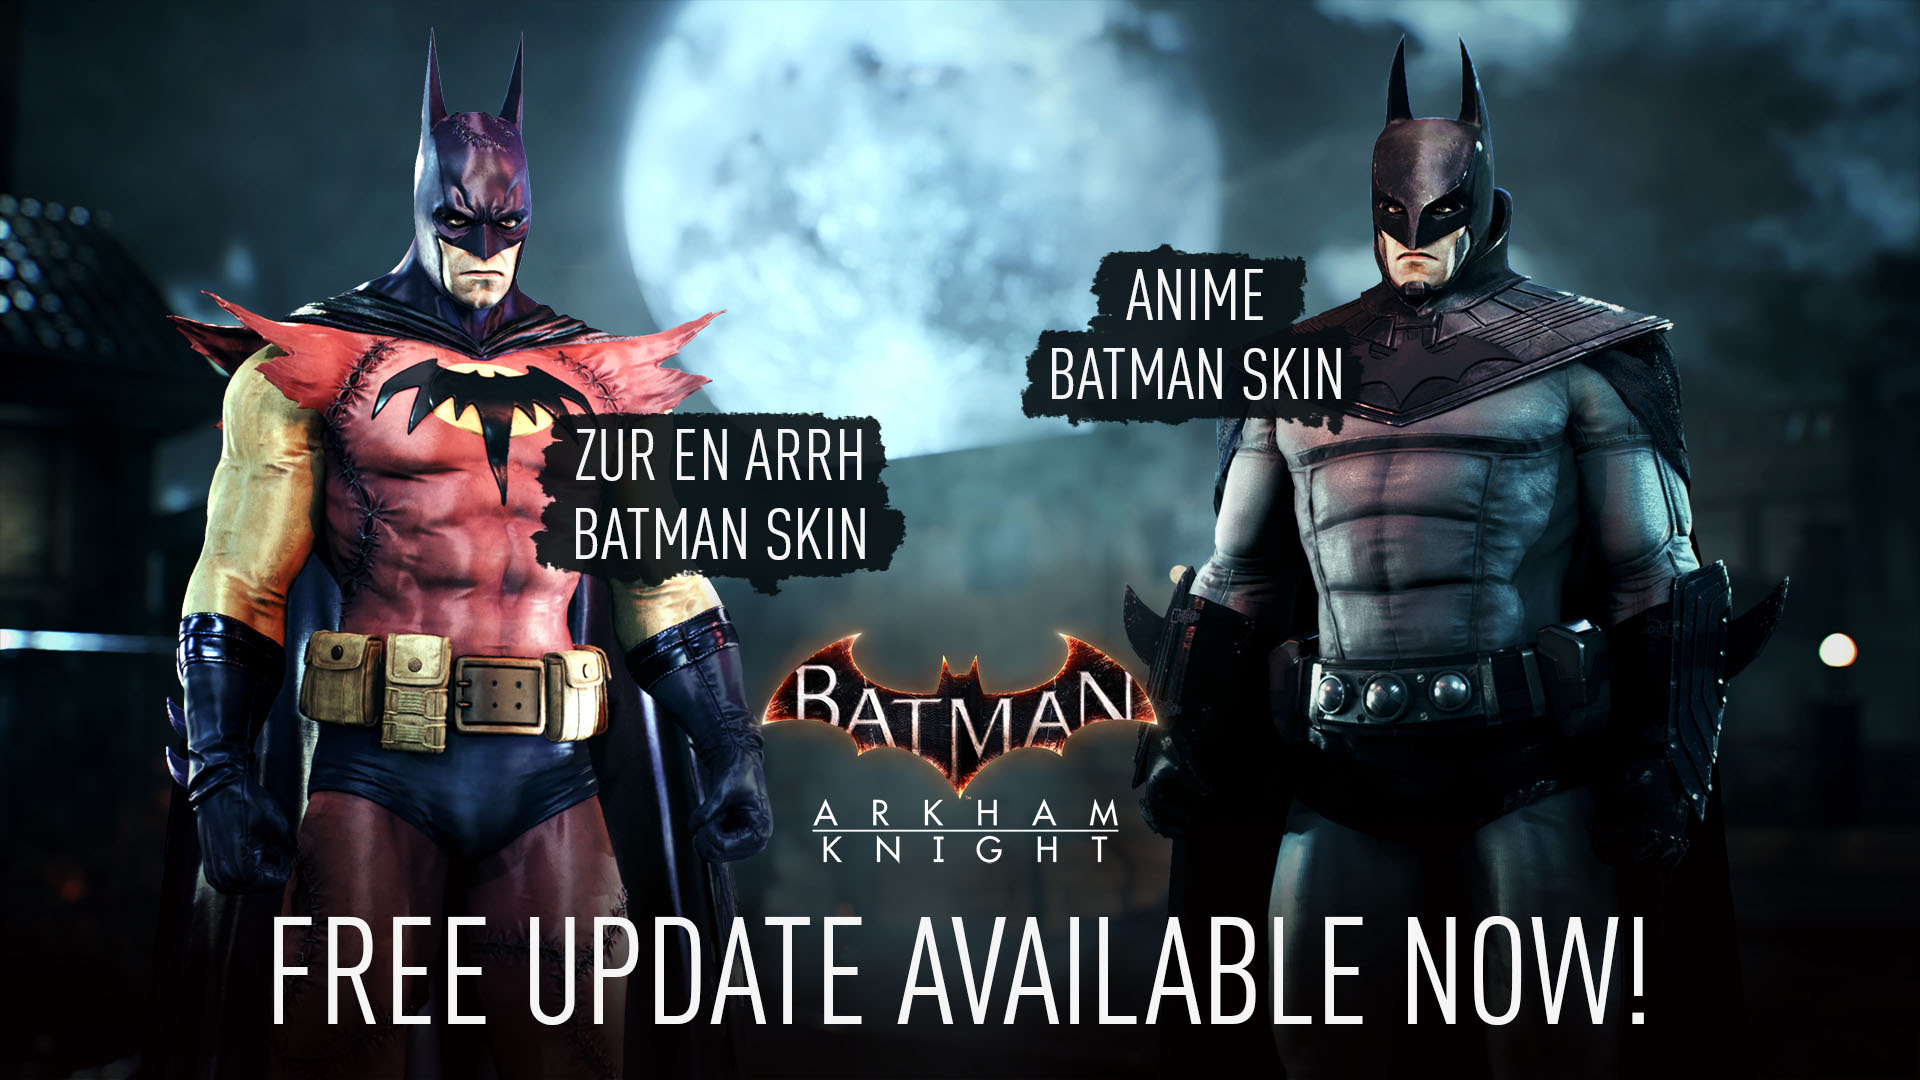 Batman Arkham Knight Players Gifted Free Skins Including Anime Batman -  PlayStation Universe